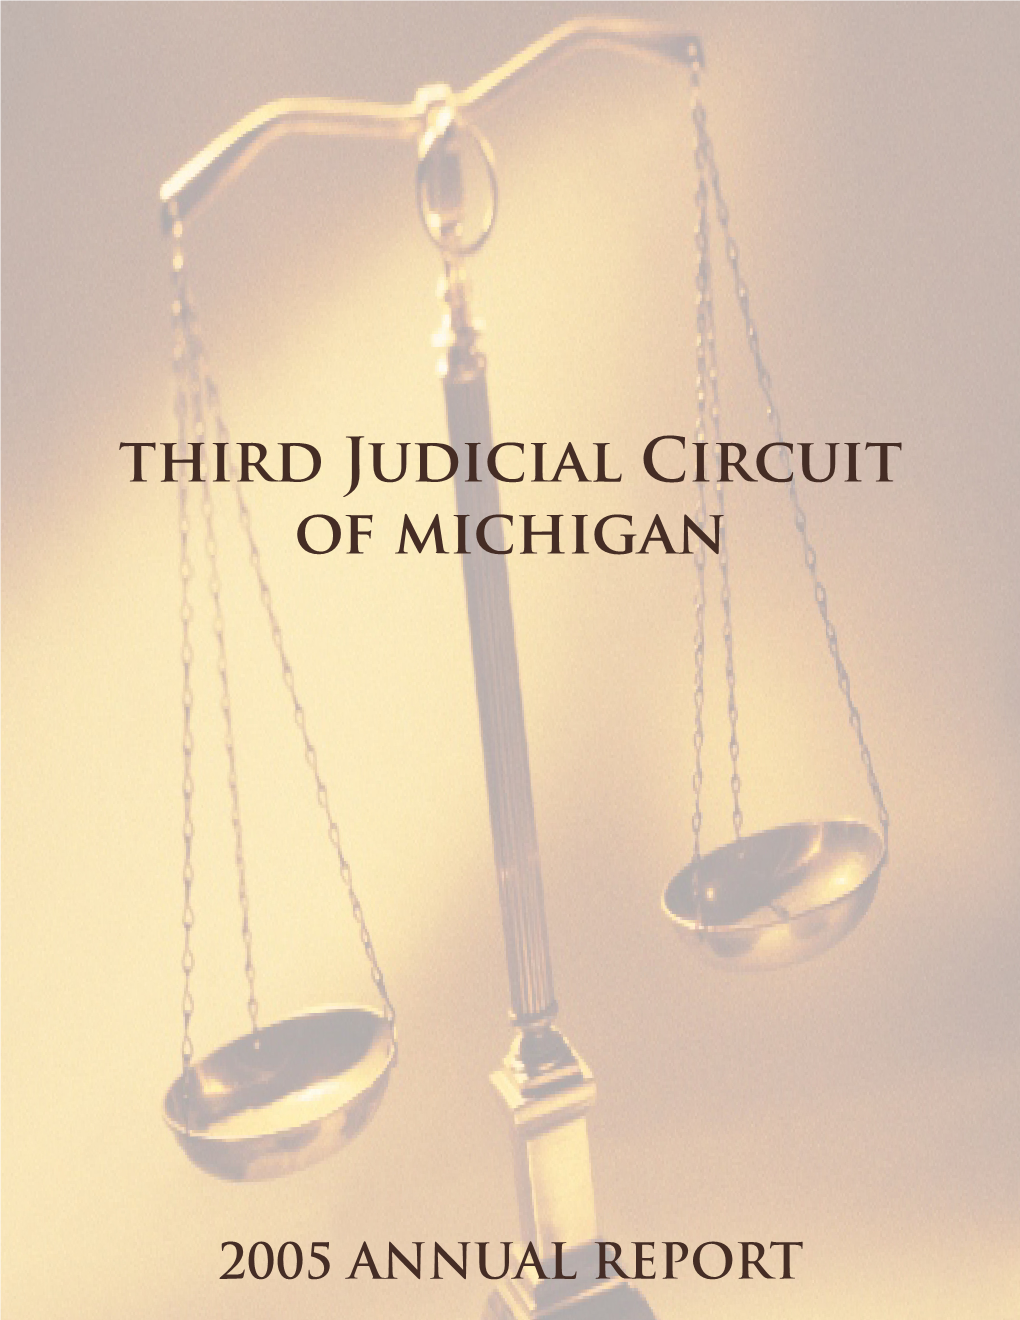 2005 ANNUAL REPORT 2005 Annual Report Third Judicial Circuit of Michigan